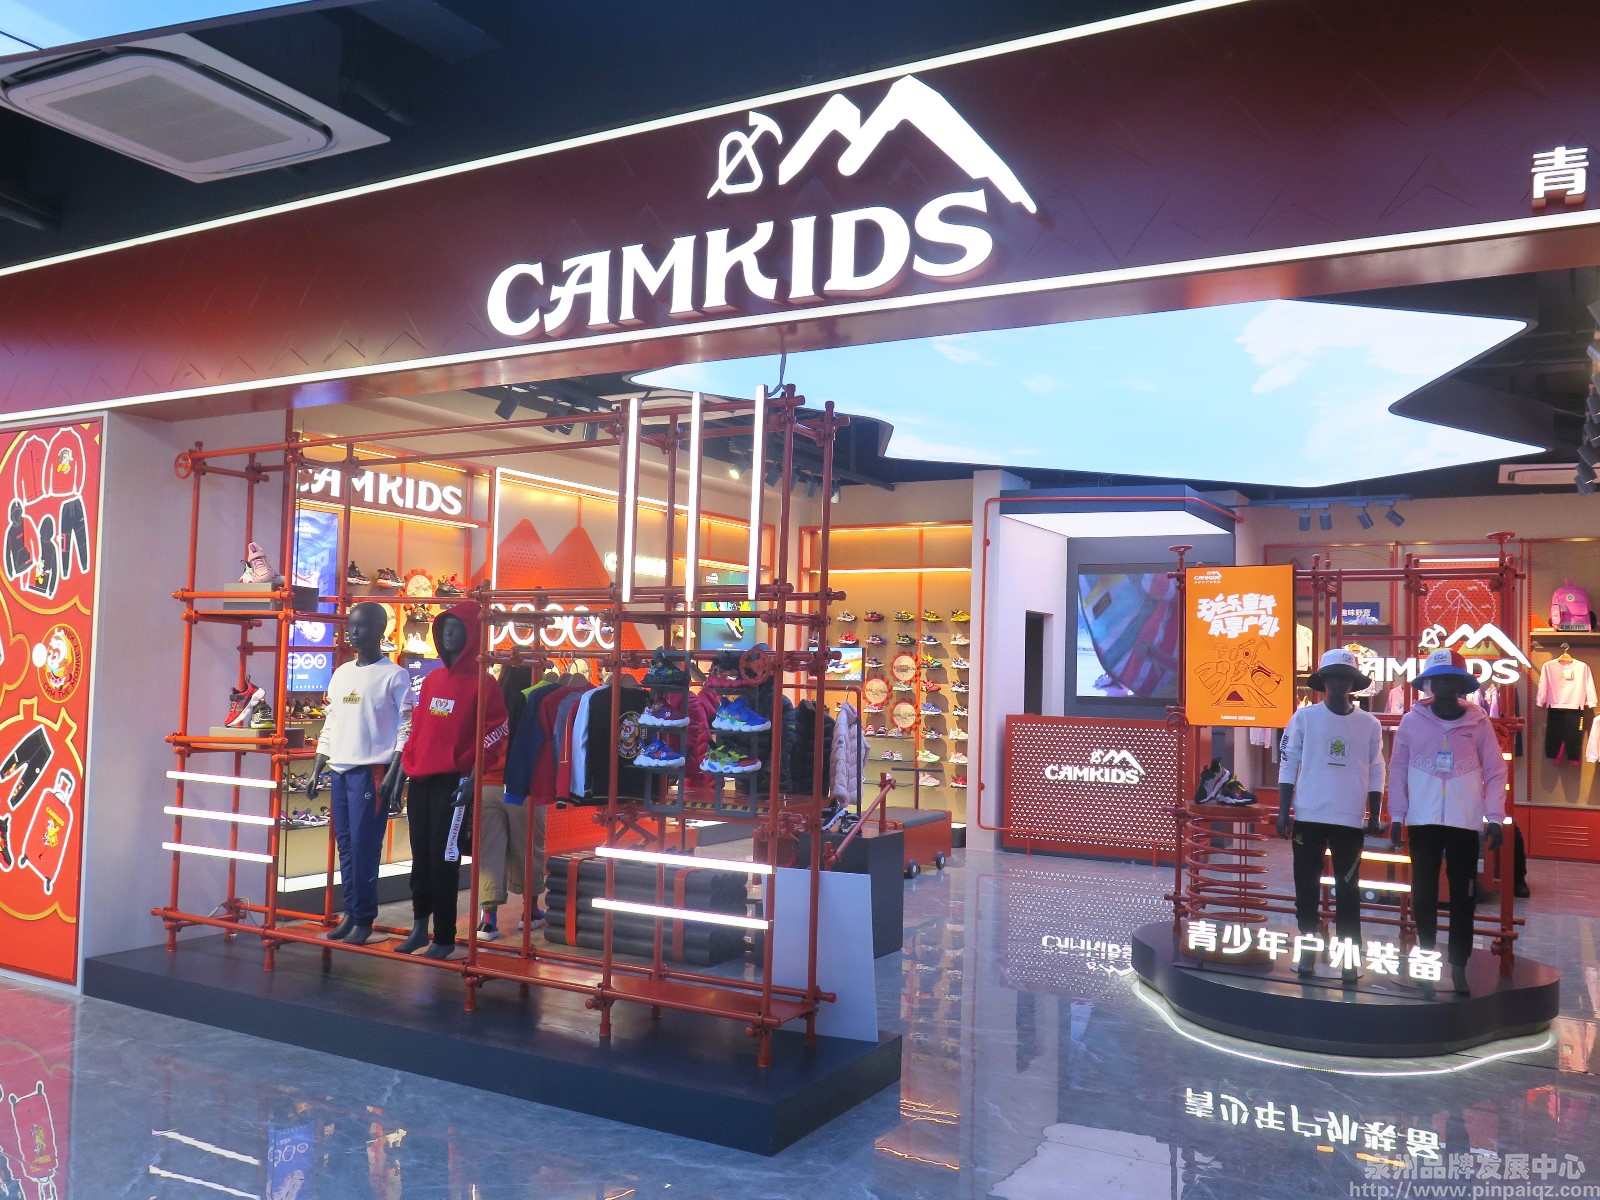 CAMKIDS举办2021年春夏新品订货会暨《大闹天宫》IP战略合作发布会